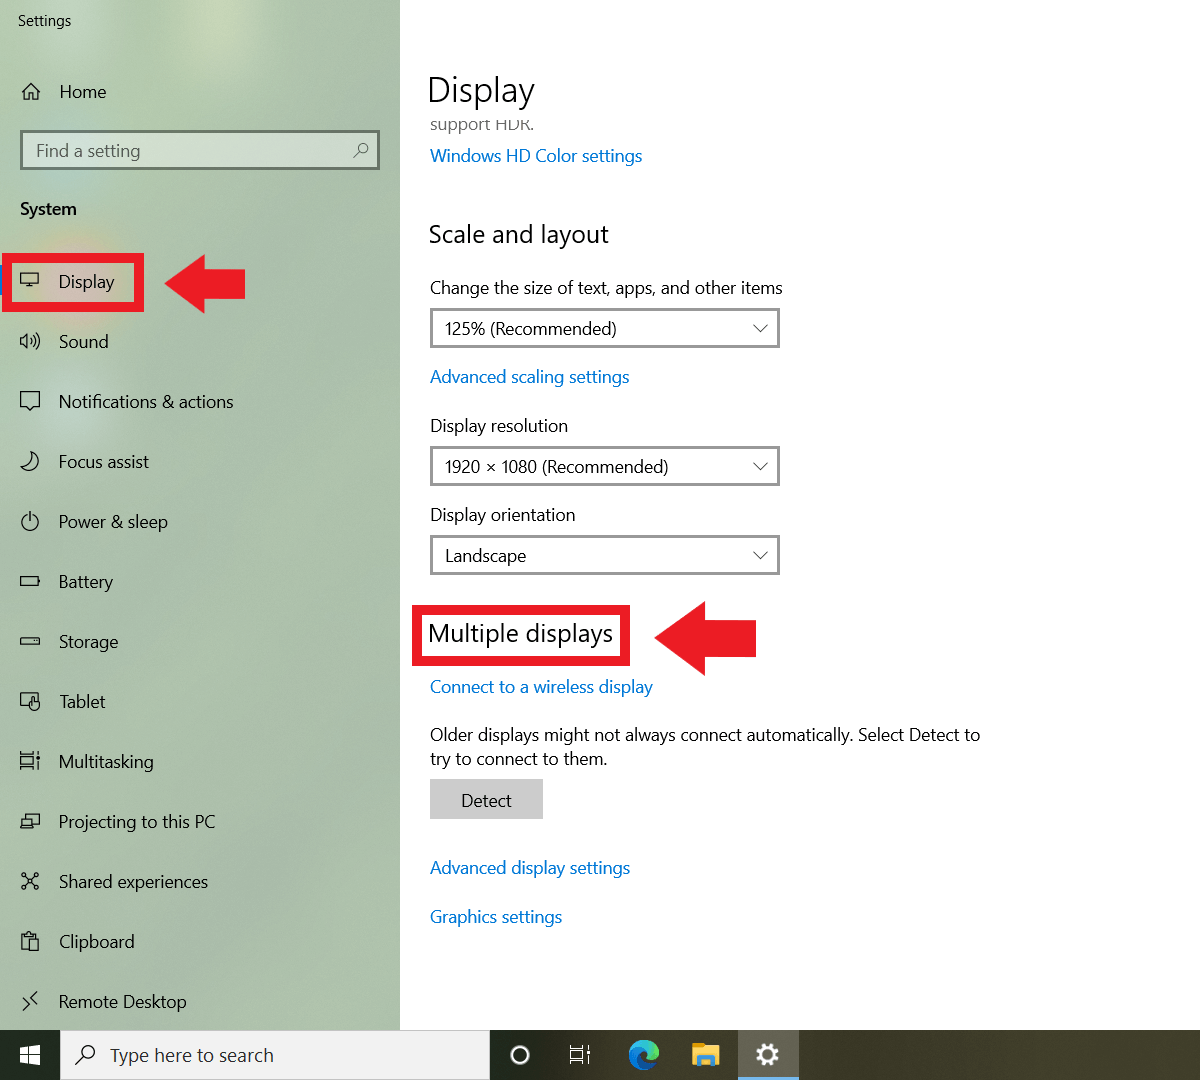 Windows 10: Settings with menu item “Display” and “Multiple displays”